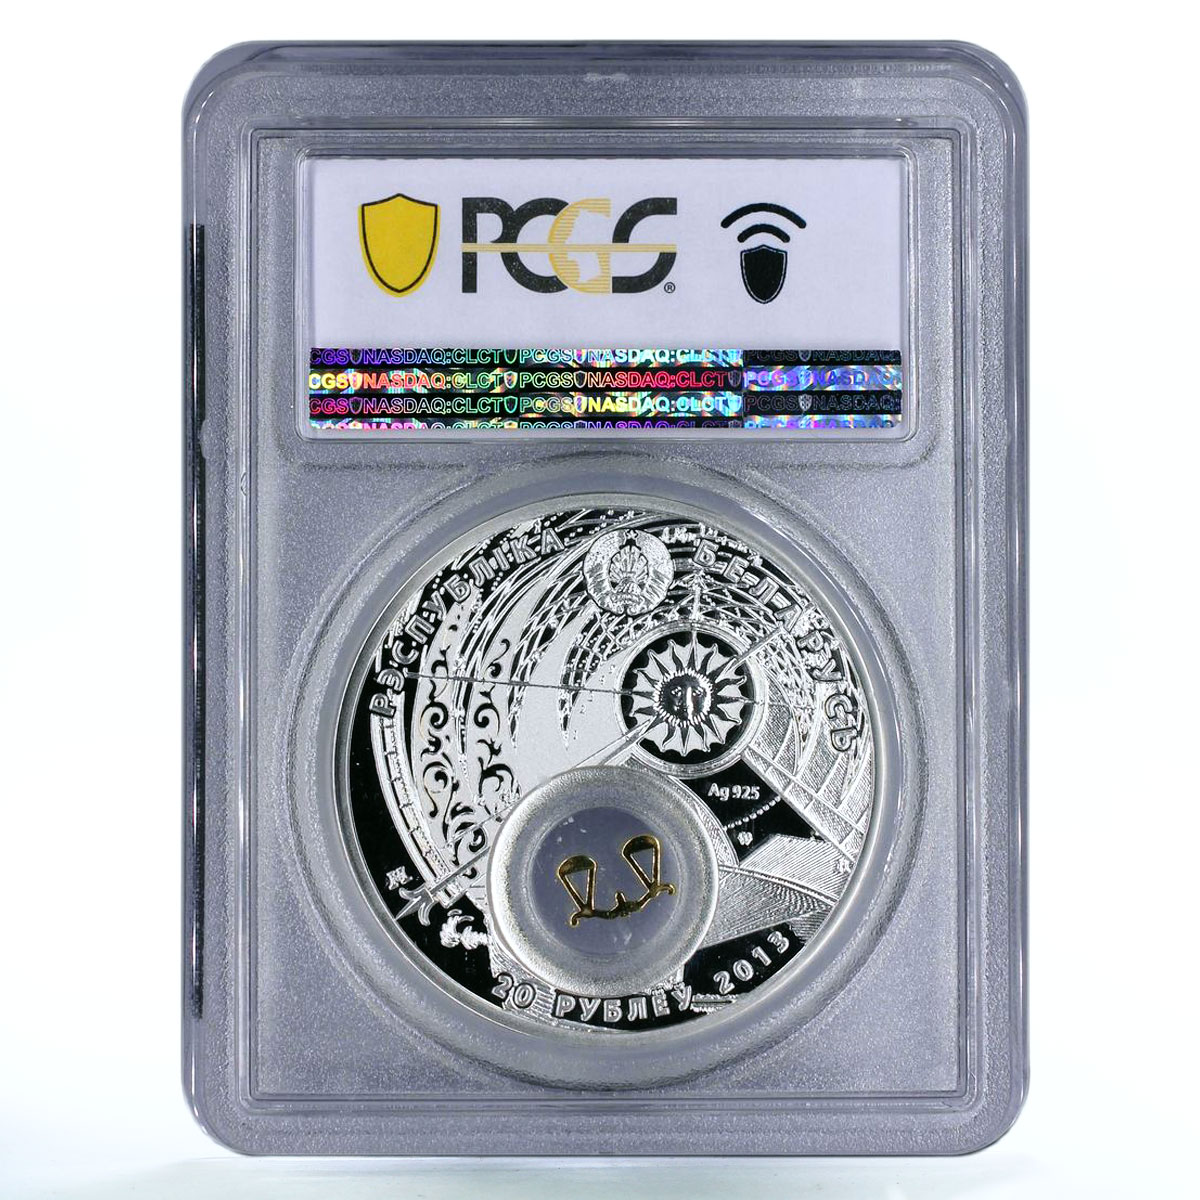 Belarus 20 rubles Zodiac Signs series Libra PR69 PCGS gilded silver coin 2013